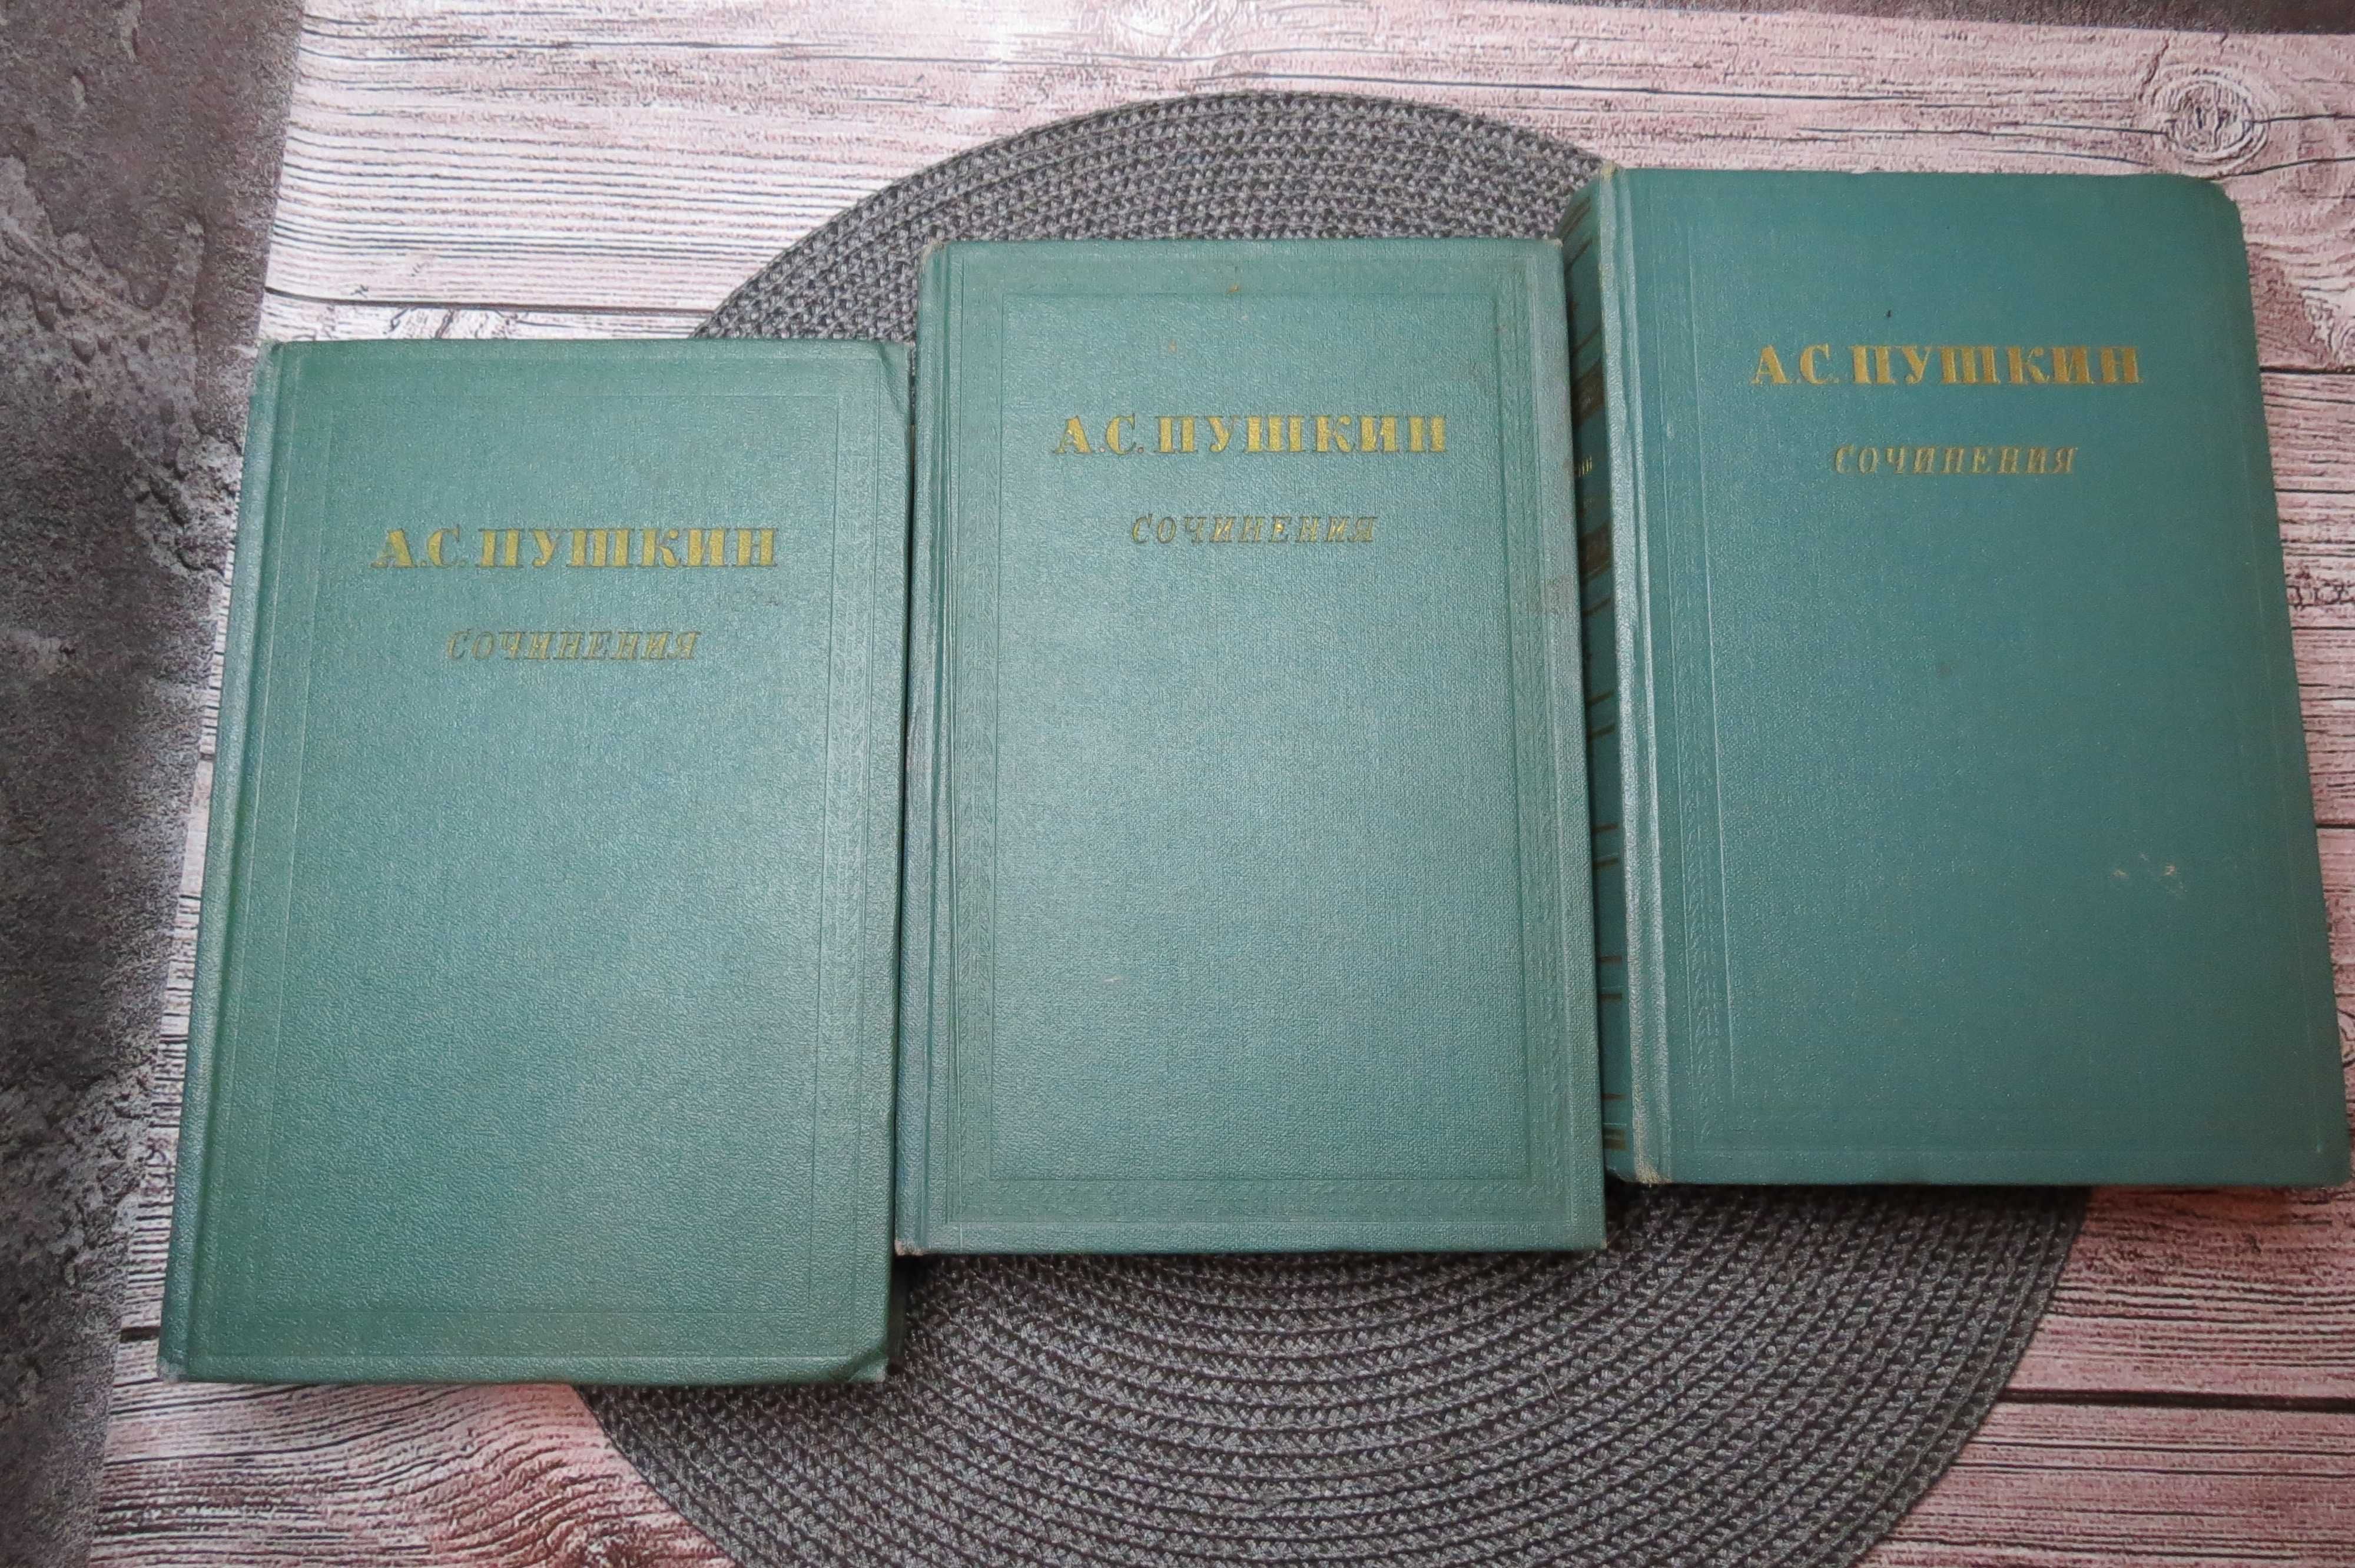 А.С. Пушкин Собрание сочинений в 3-х томах